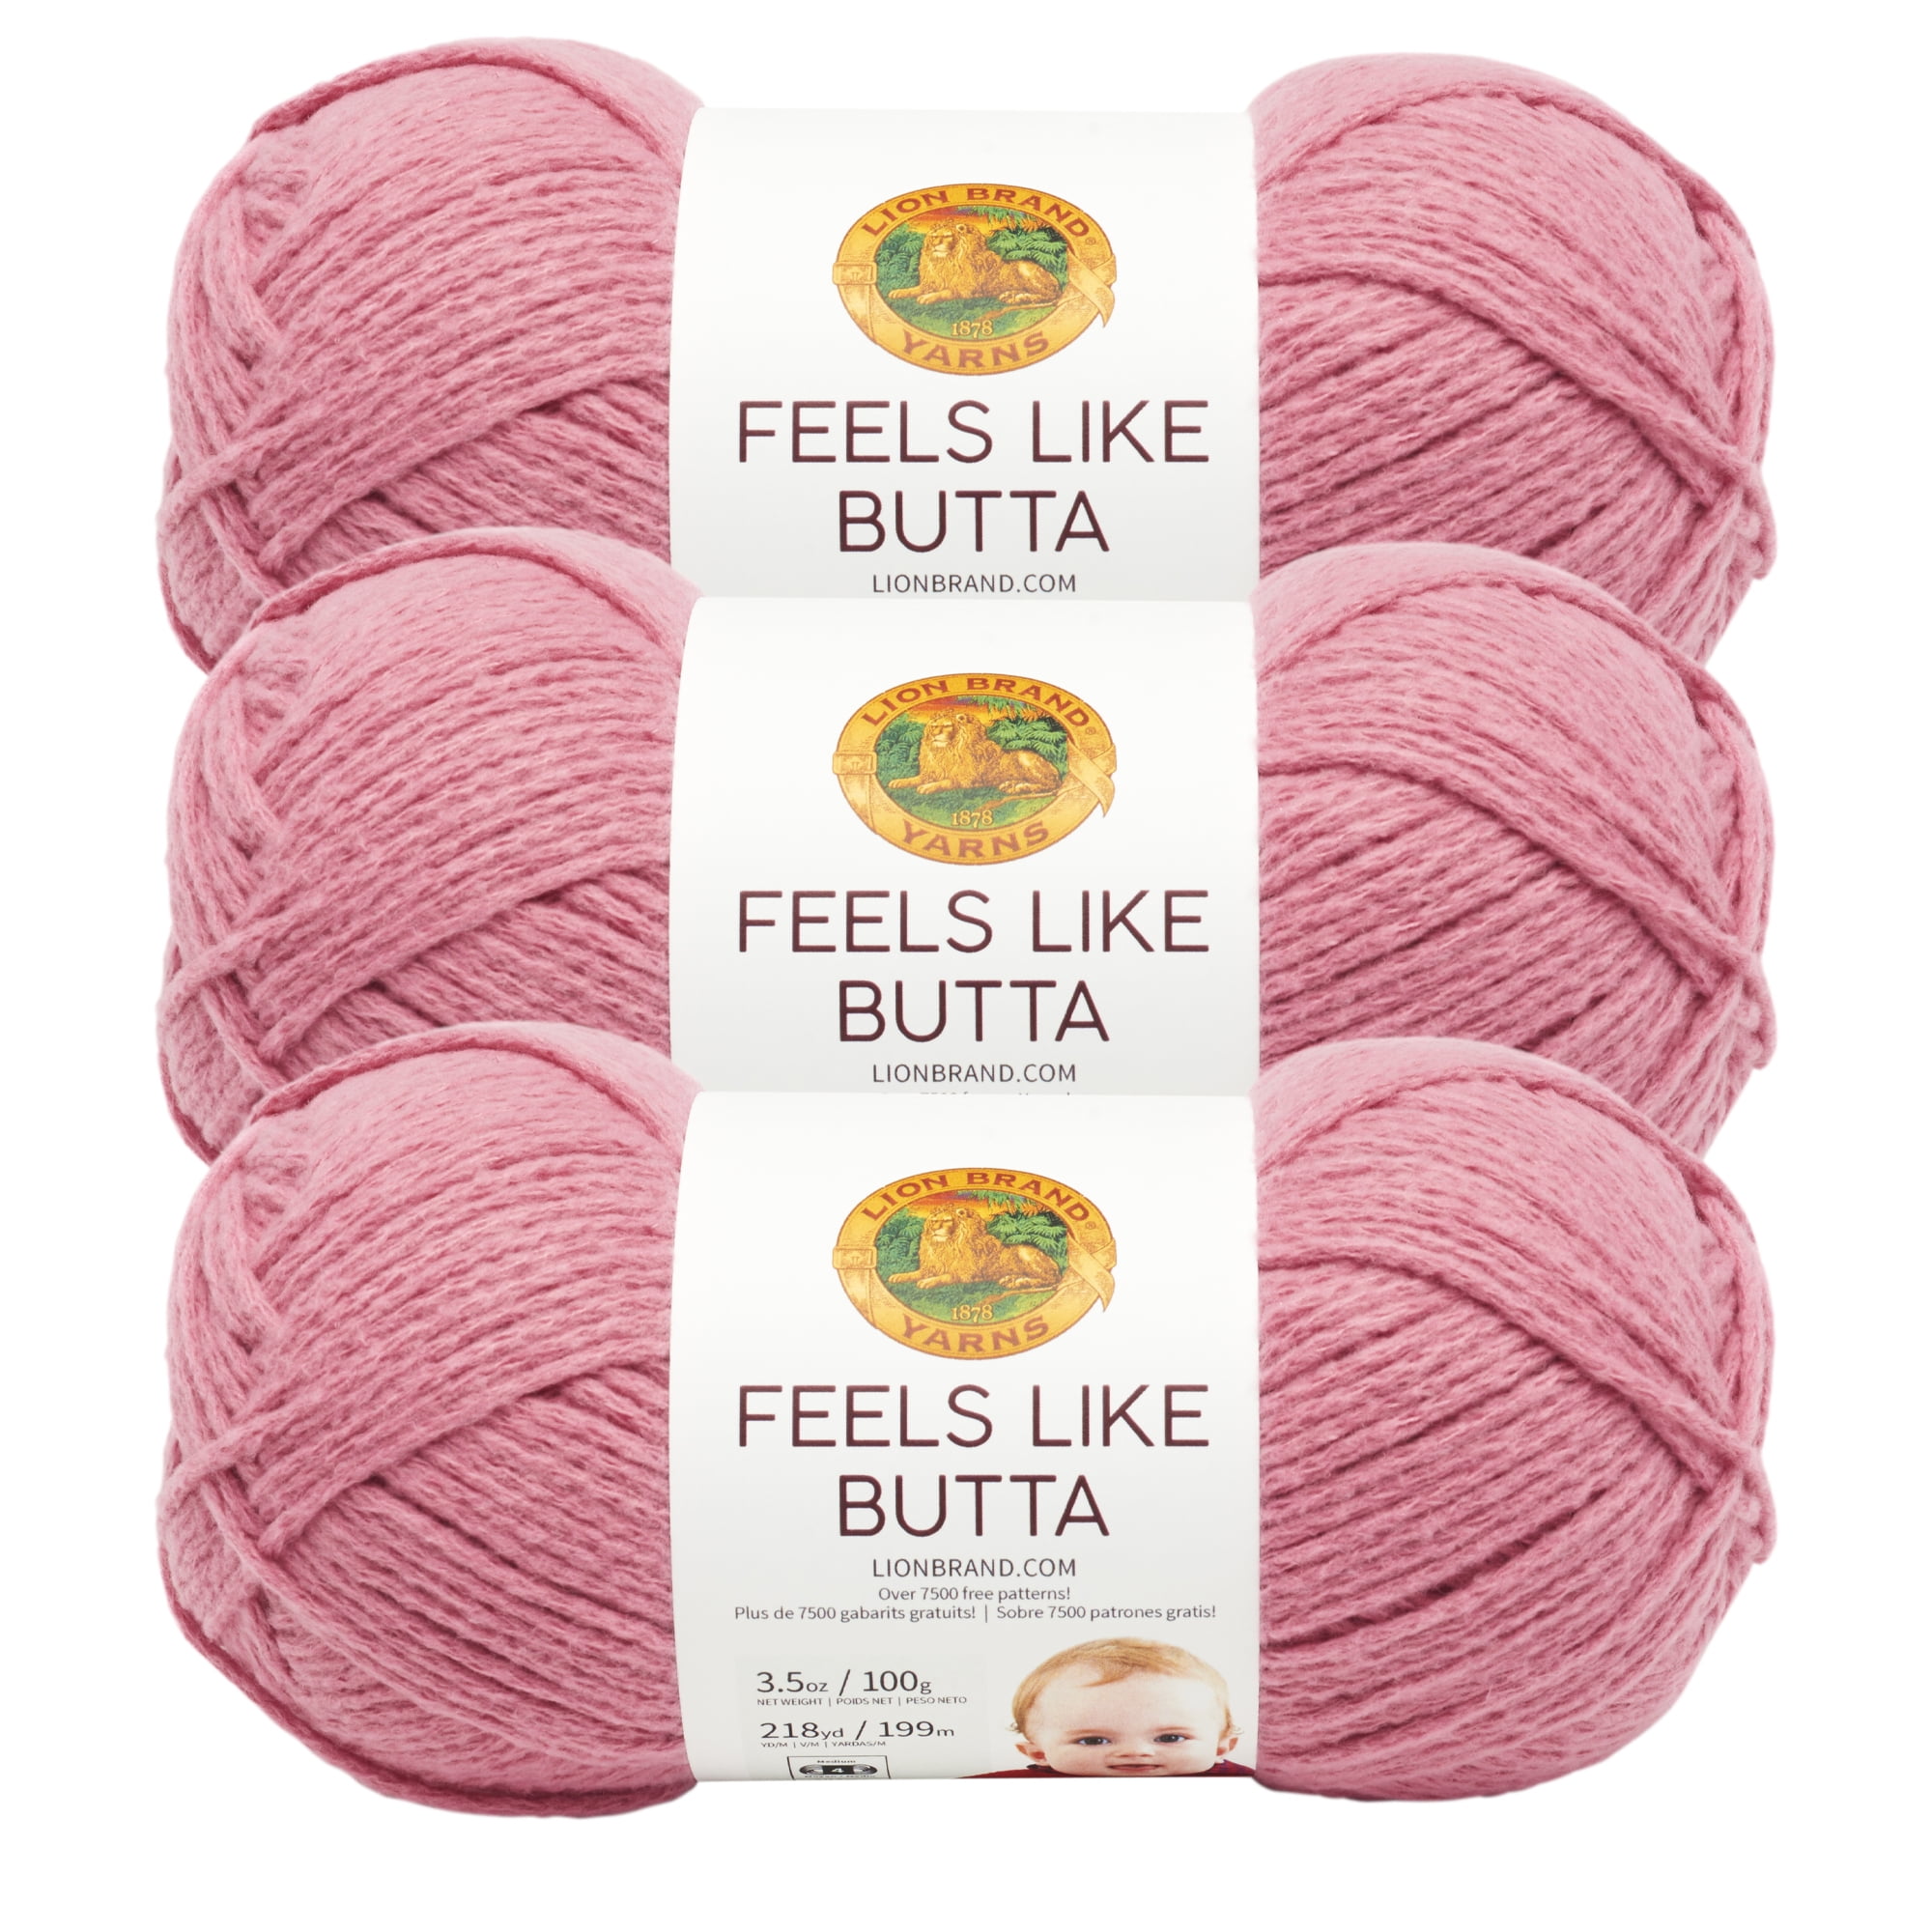 Lion Brand Feels Like Butta Yarn Ice 215-106 (6-Skein) Same Dye Lot Worsted Medium #4 Soft Knitting Yarn Crochet 100% Polyester Bundle with 1